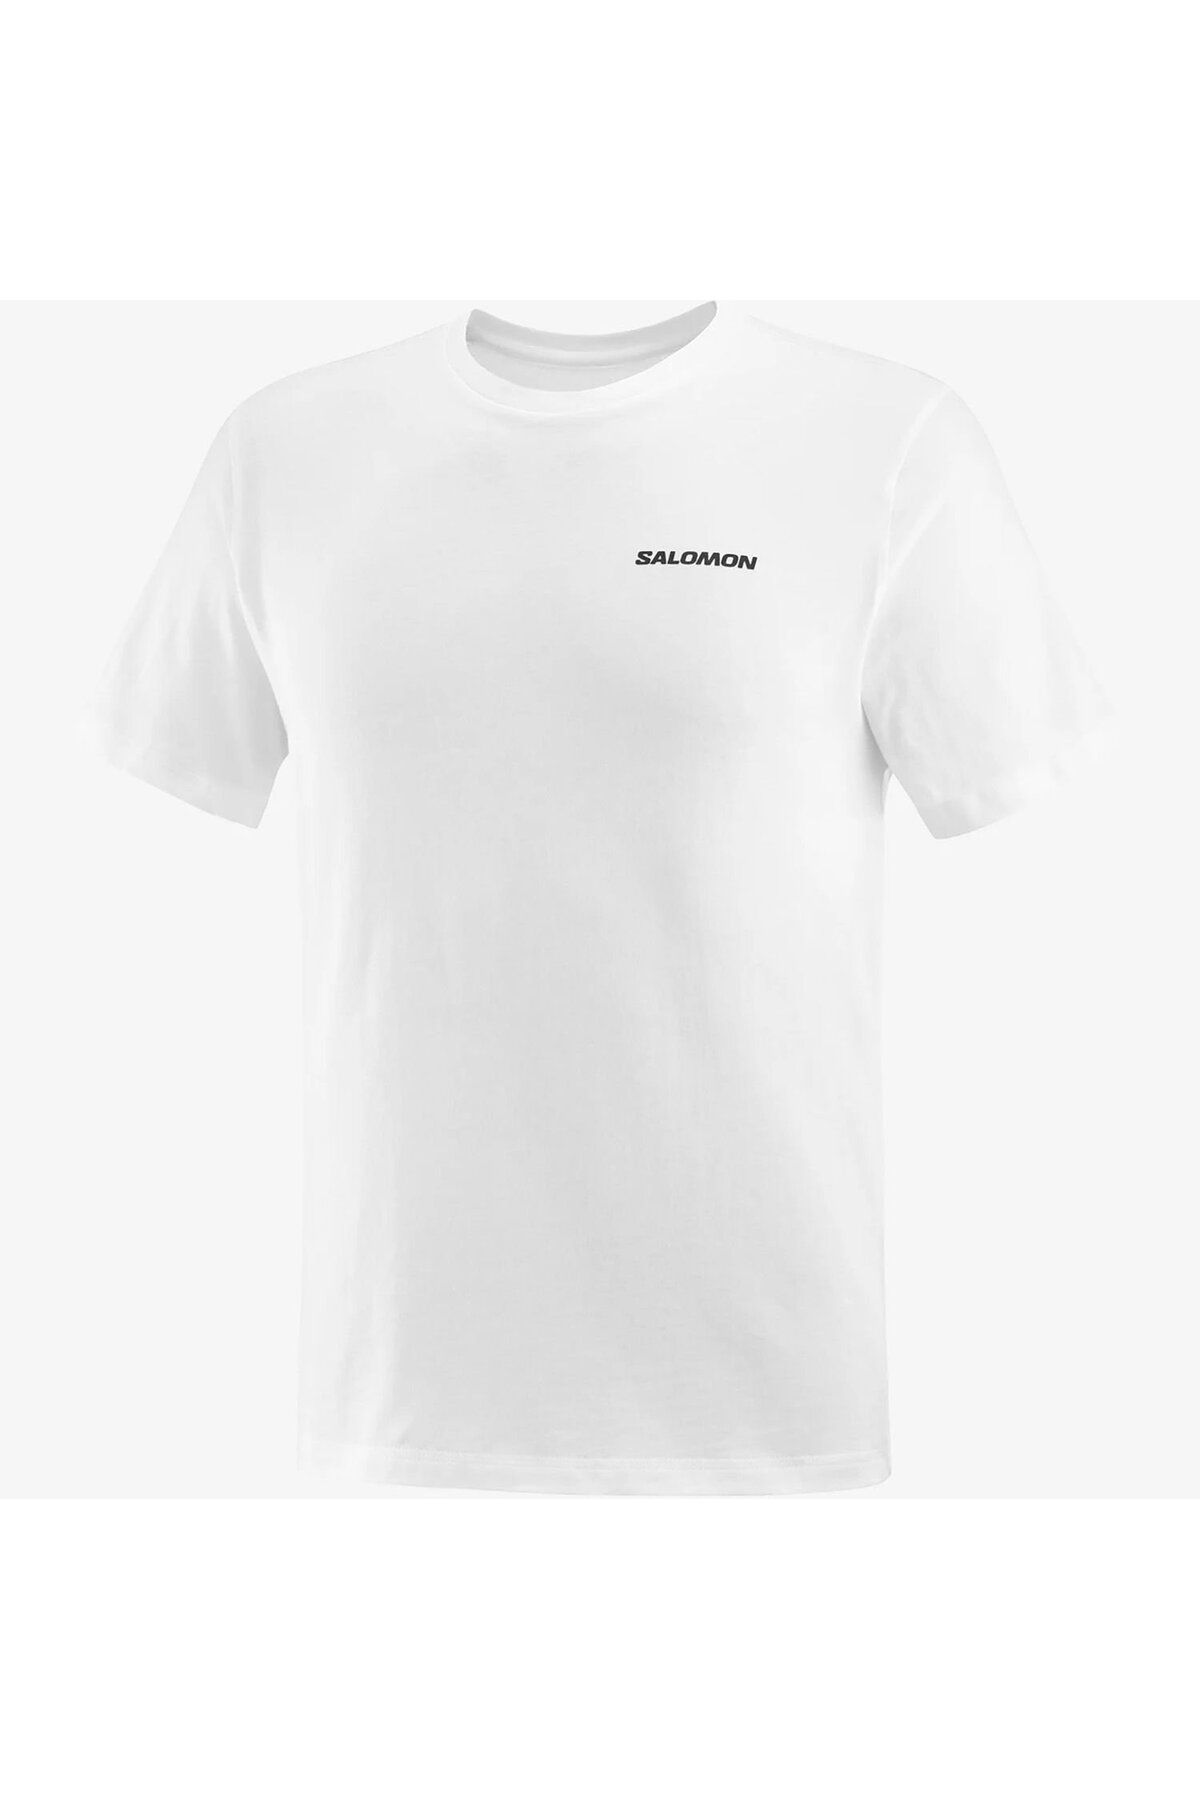 Salomon LC2219 Graphic Perf SS Tee Tişört Erkek T-Shirt BEYAZ